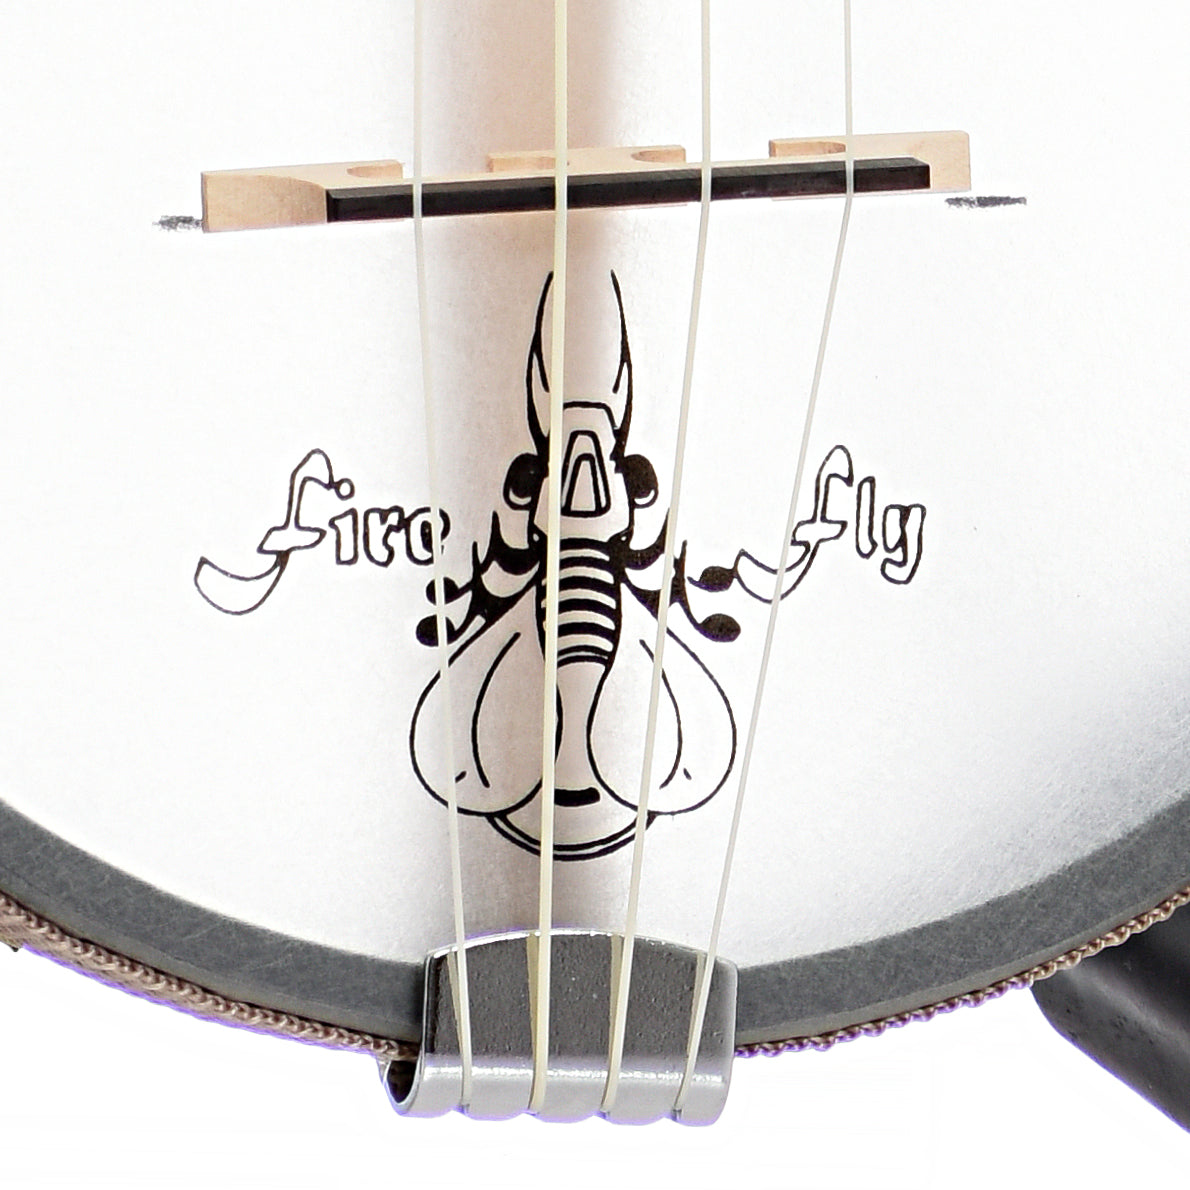 Tailpiece and bridge of Magic Fluke Company Firefly Soprano Banjo Uke